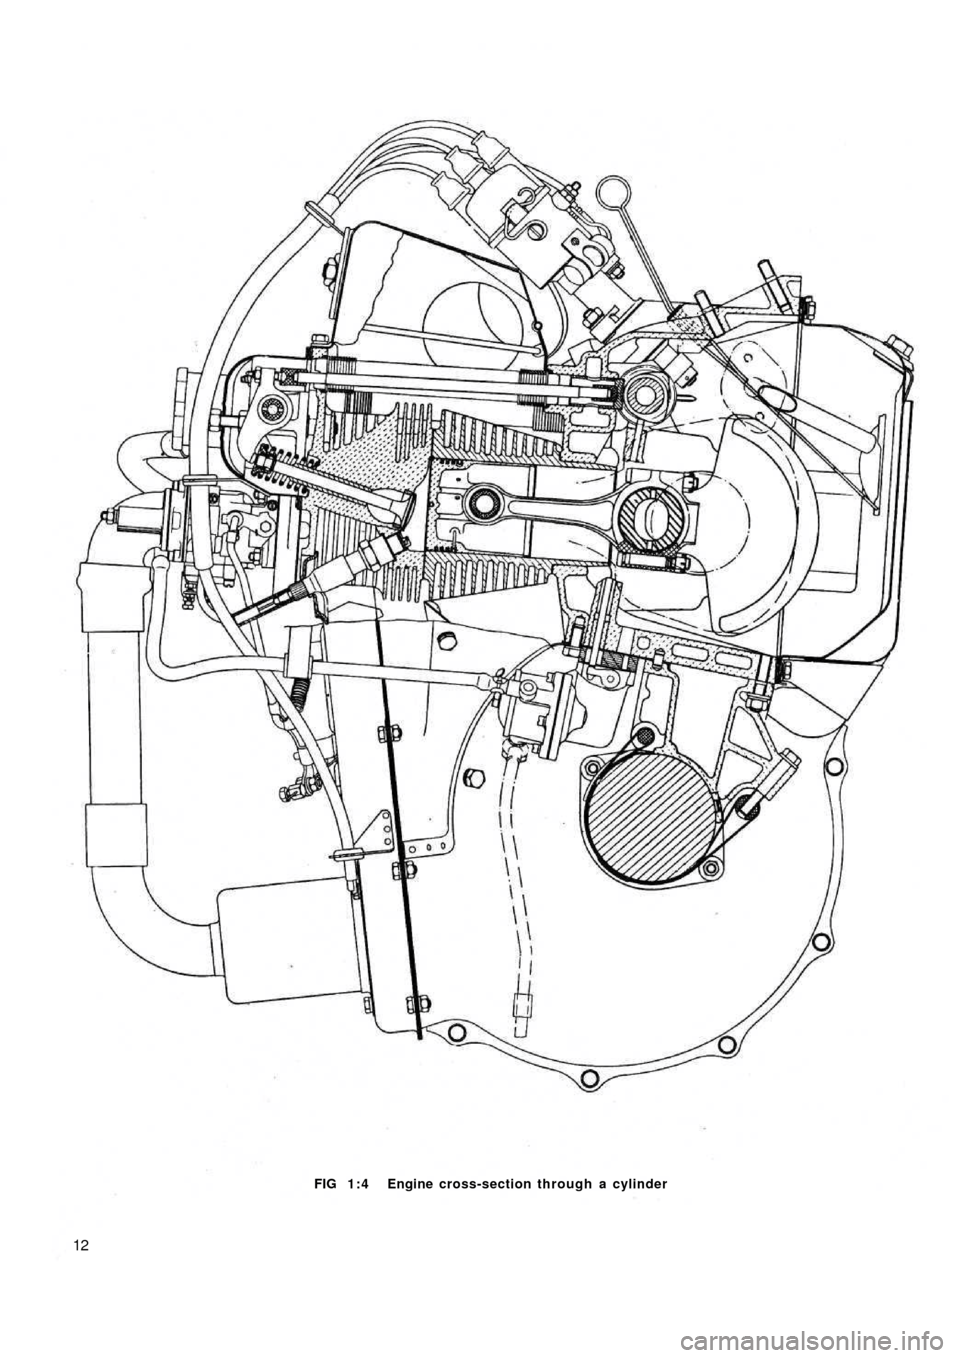 FIAT 500 1960 1.G Workshop Manual FIG 1 : 4  Engine cross-section through a cylinder
12 